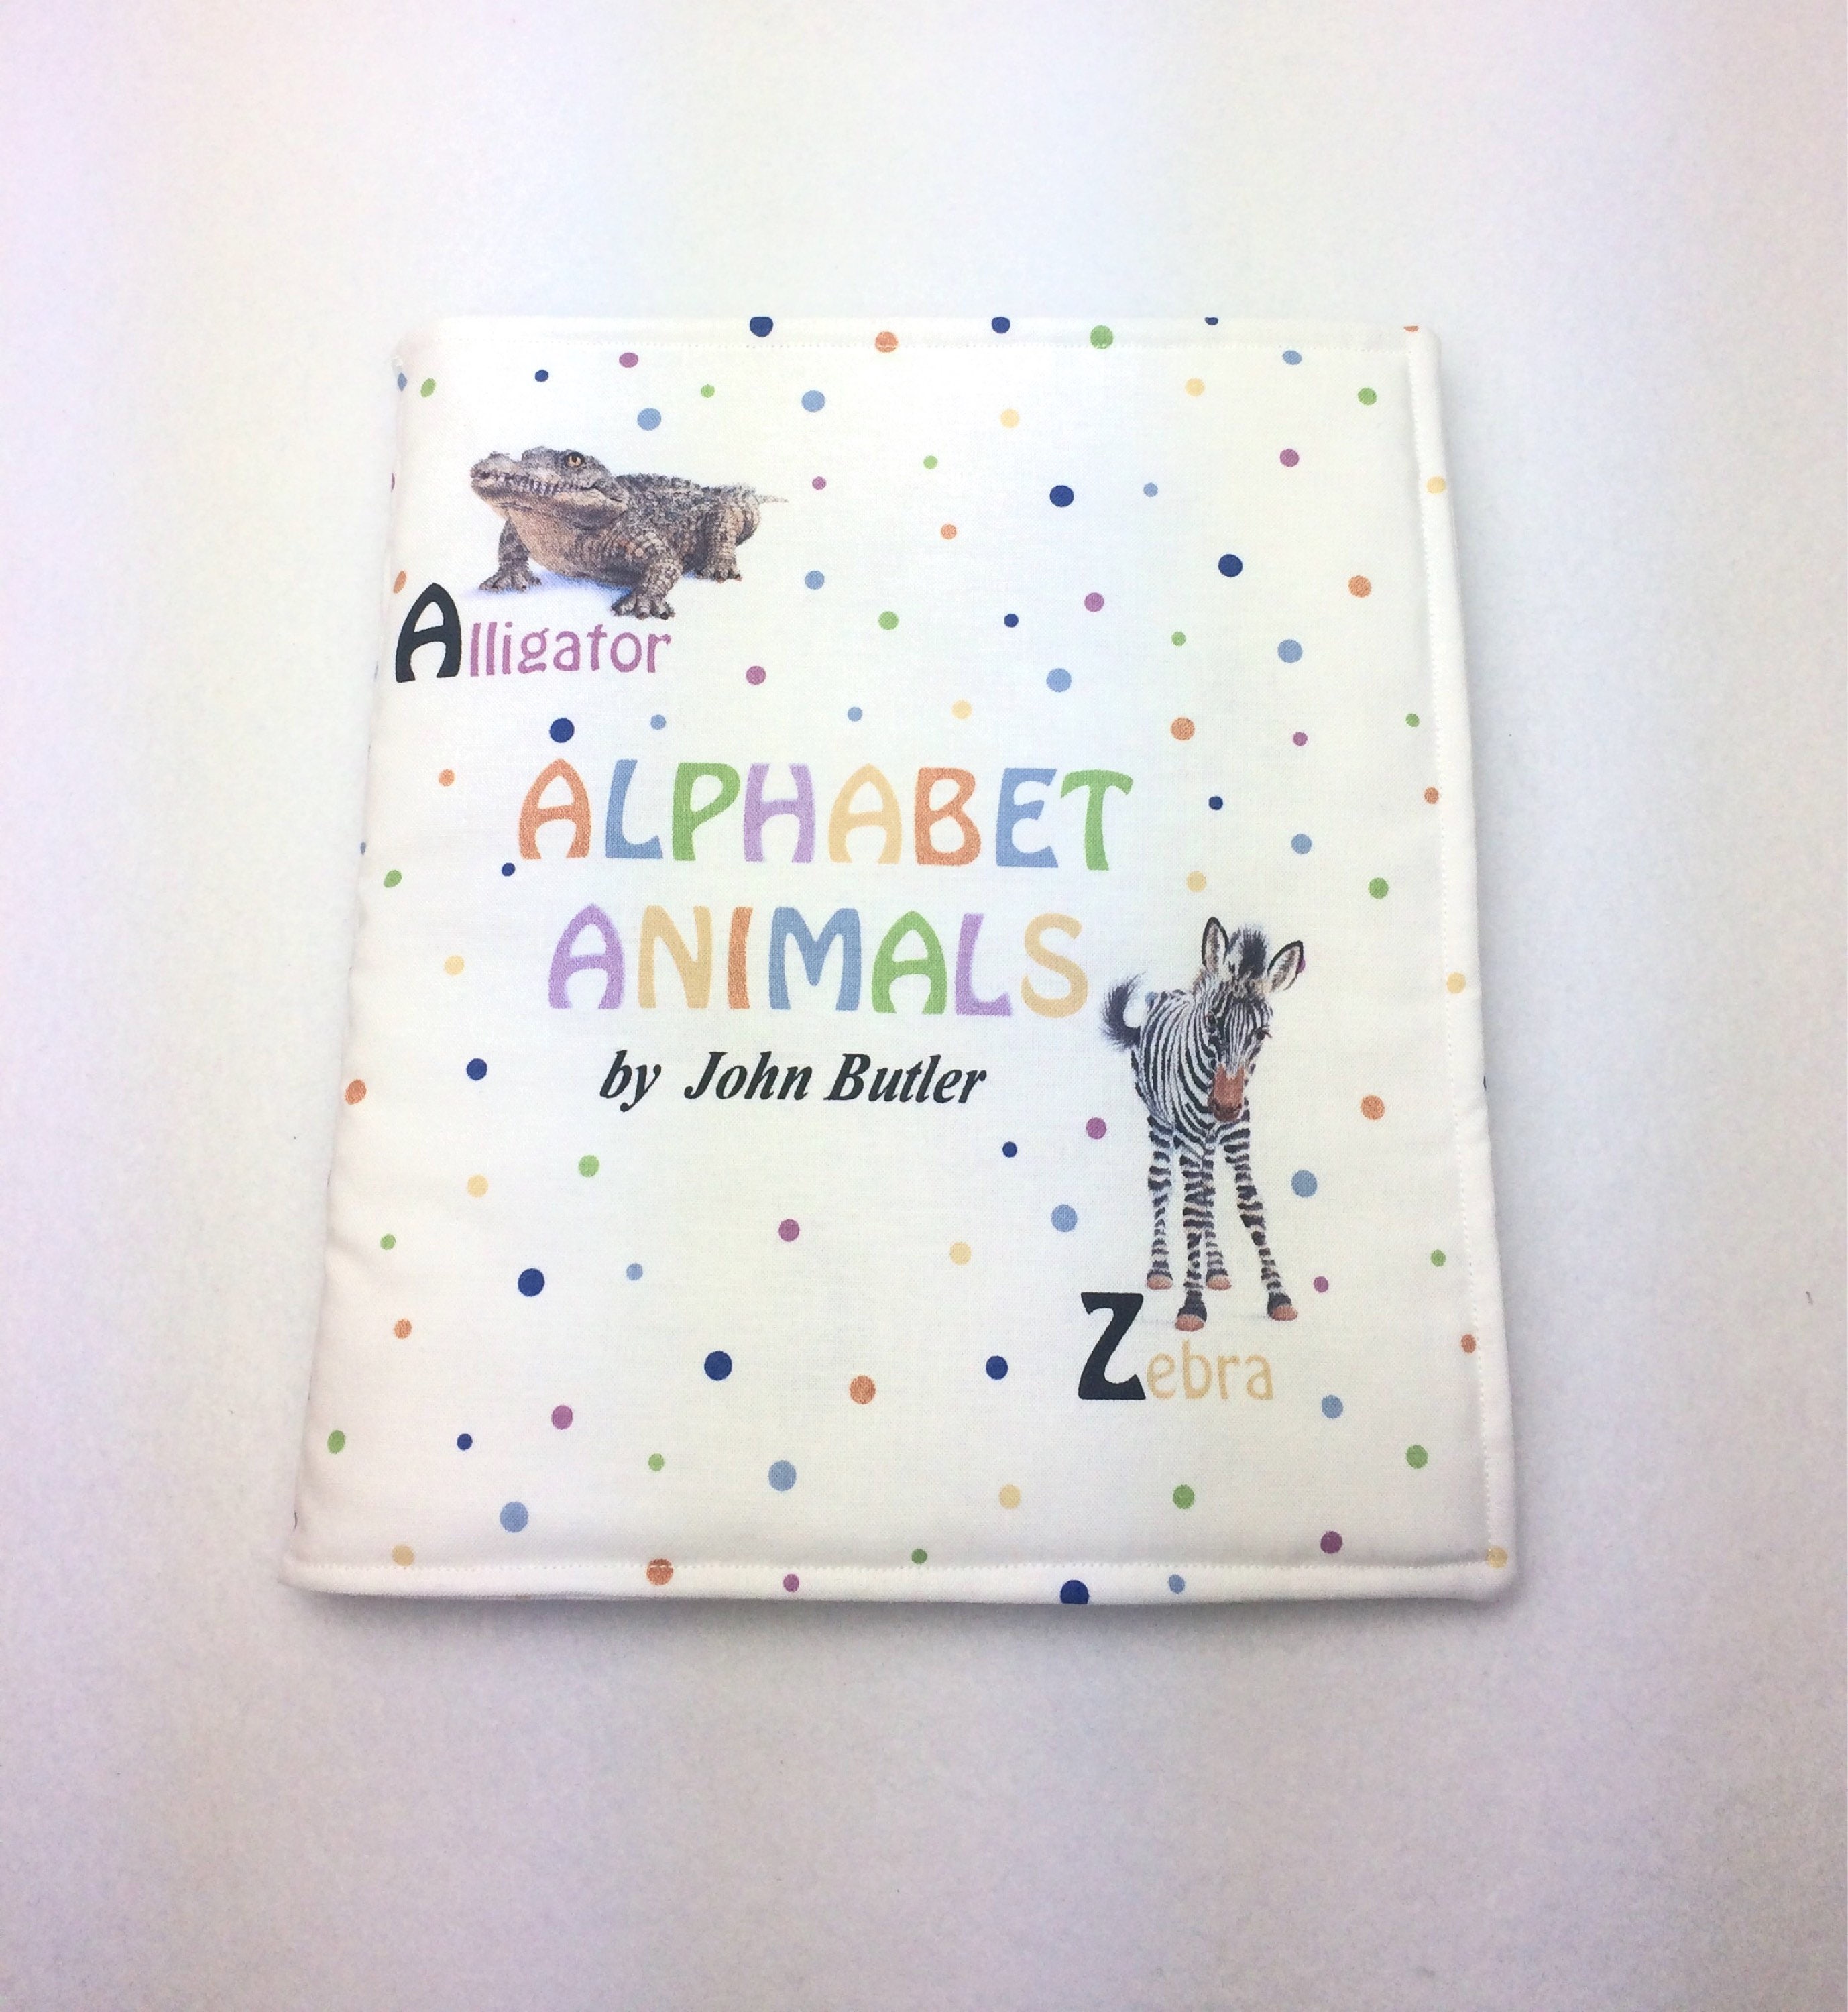 Safari Animals Quiet Book Crochet Pattern Busy Activity Sensory Pop-up Book  With Safari Animals Amigurumi Pattern English, Français 